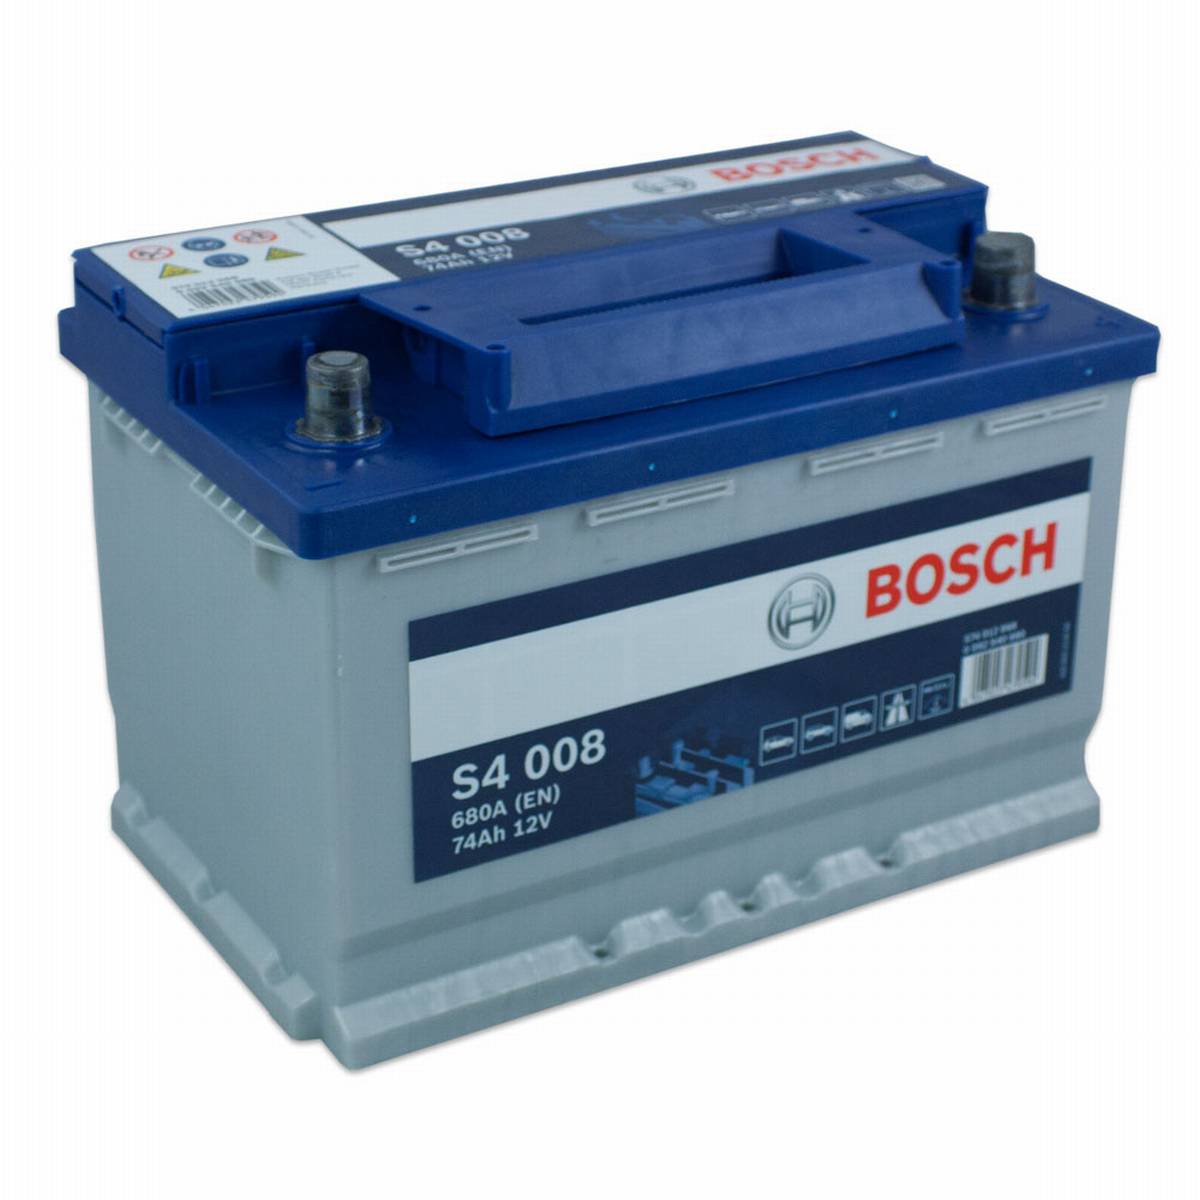 Bosch car battery S4 008 574 012 068 12V 74Ah 680A/EN